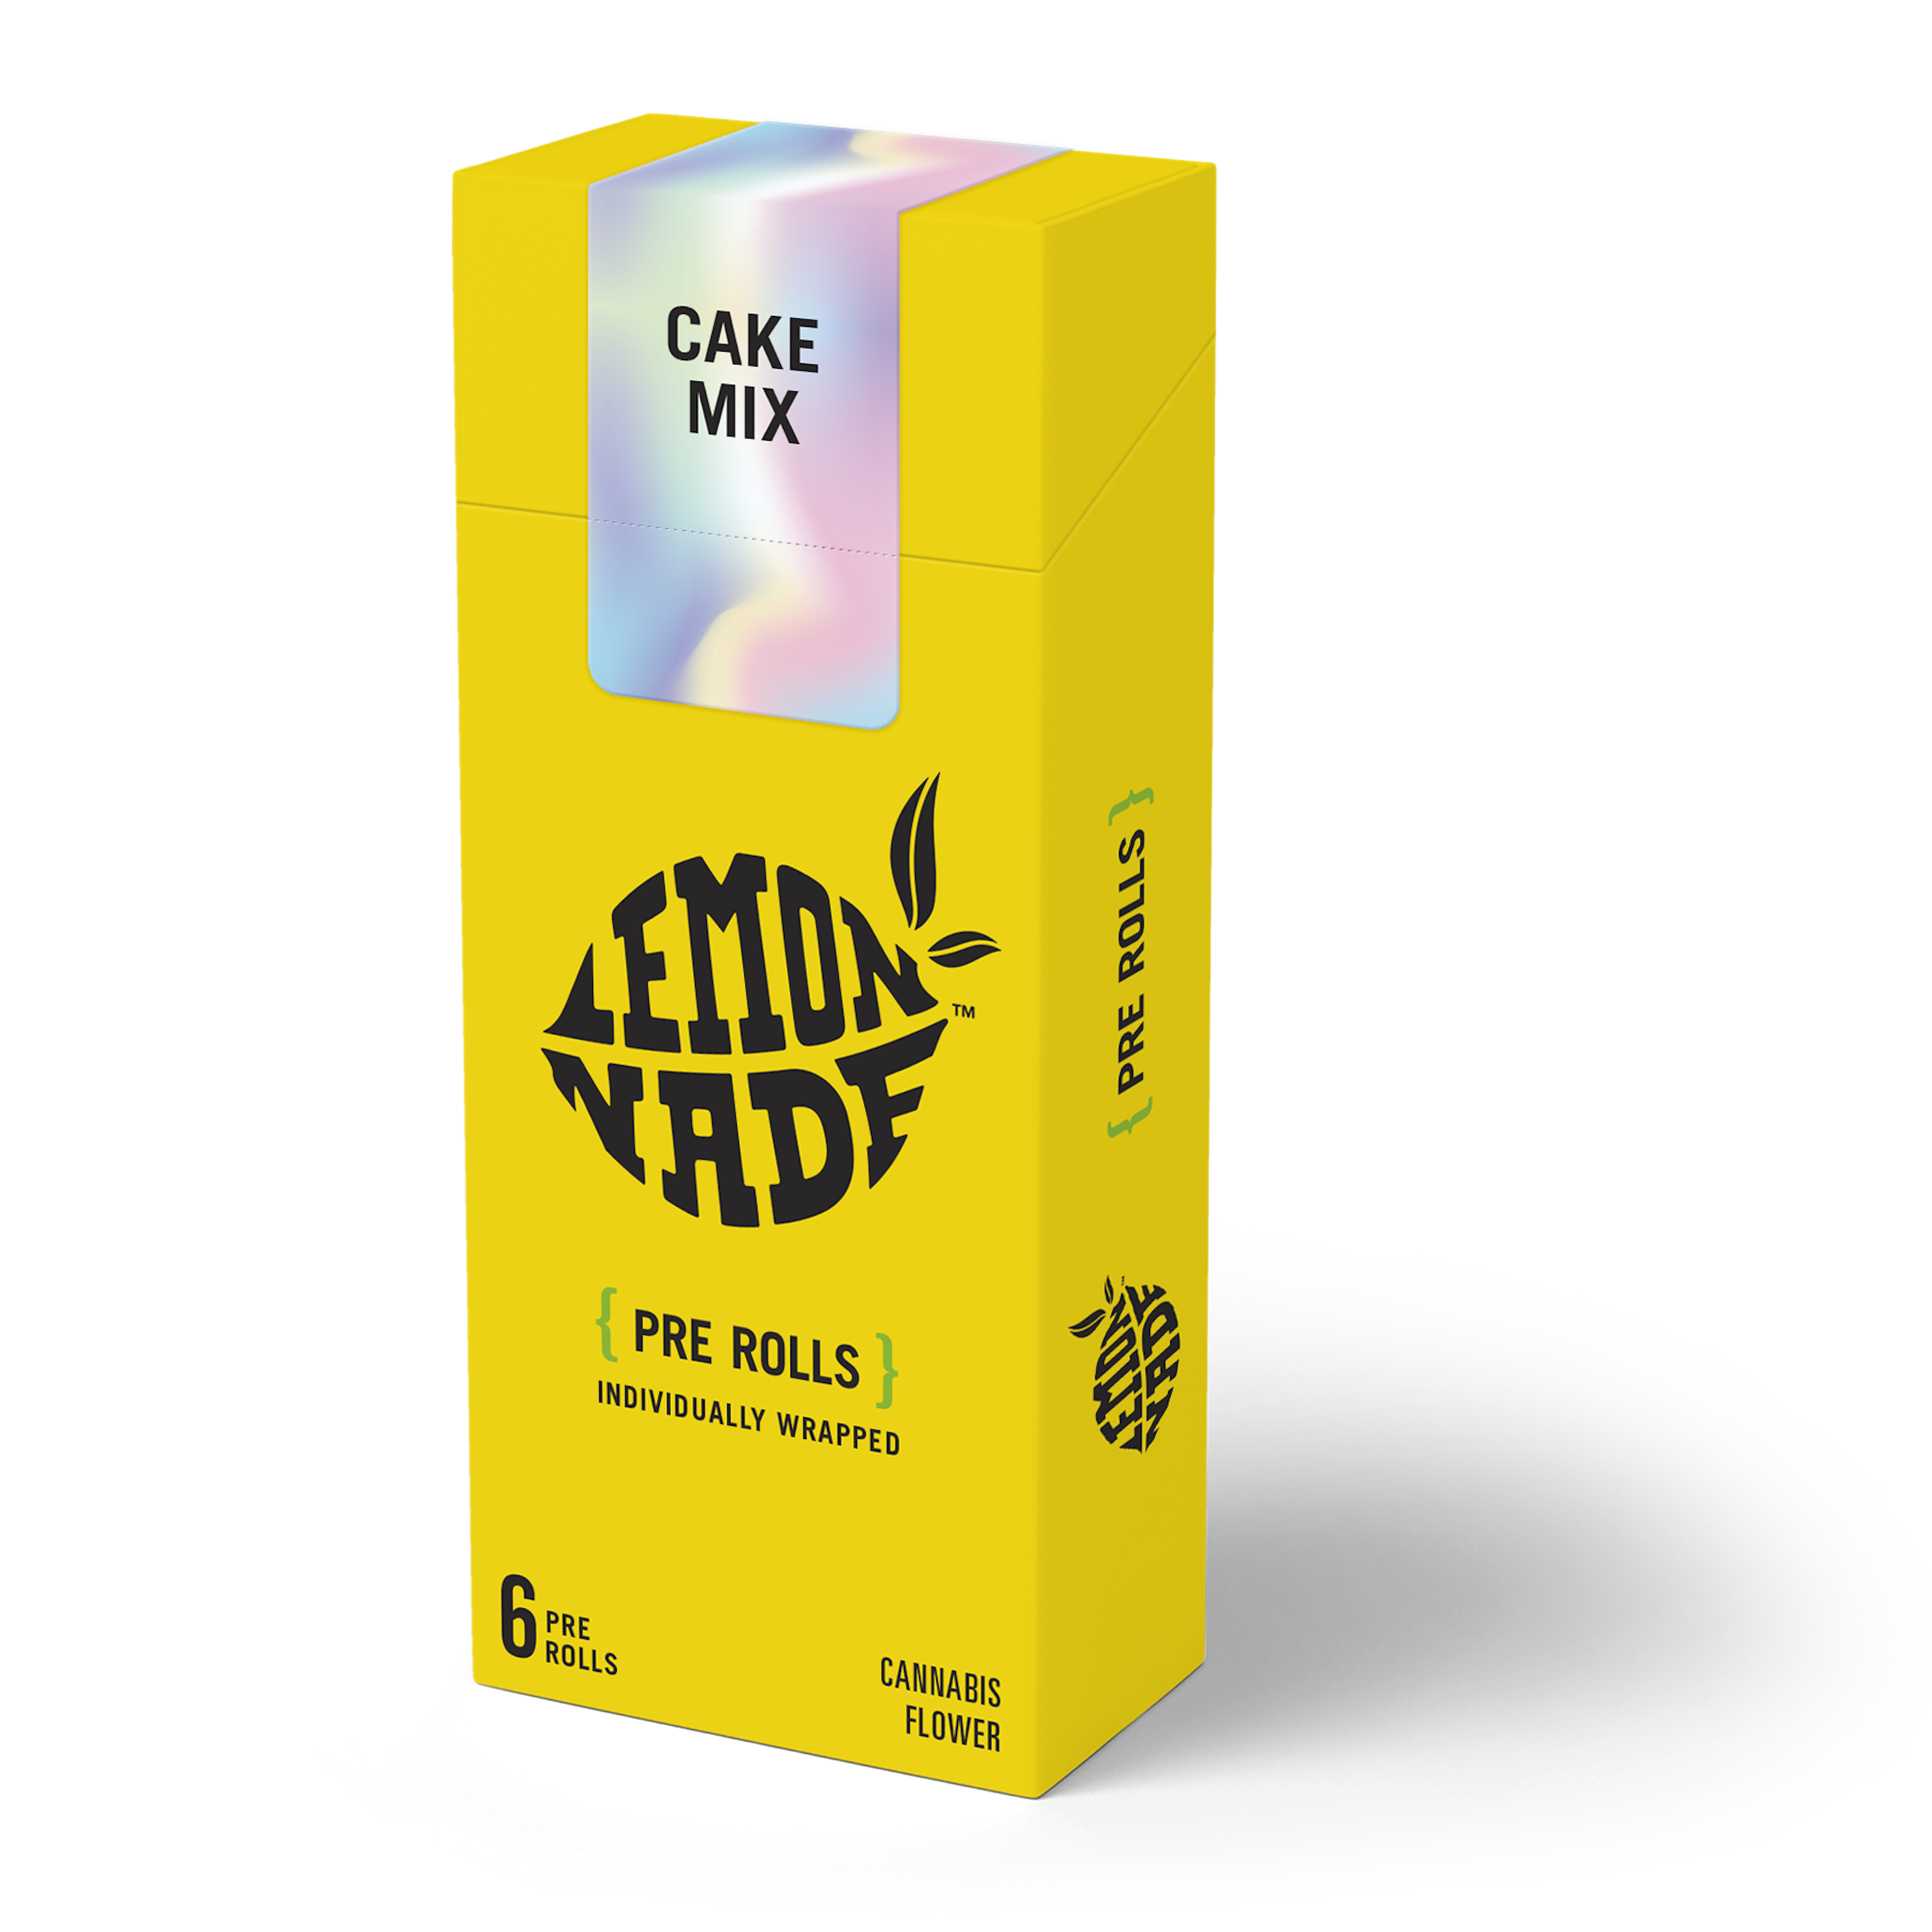 (Deactivated) - Lemonnade - Cake Mix - THC - Indoor - Preroll - Joint - 1g - CA